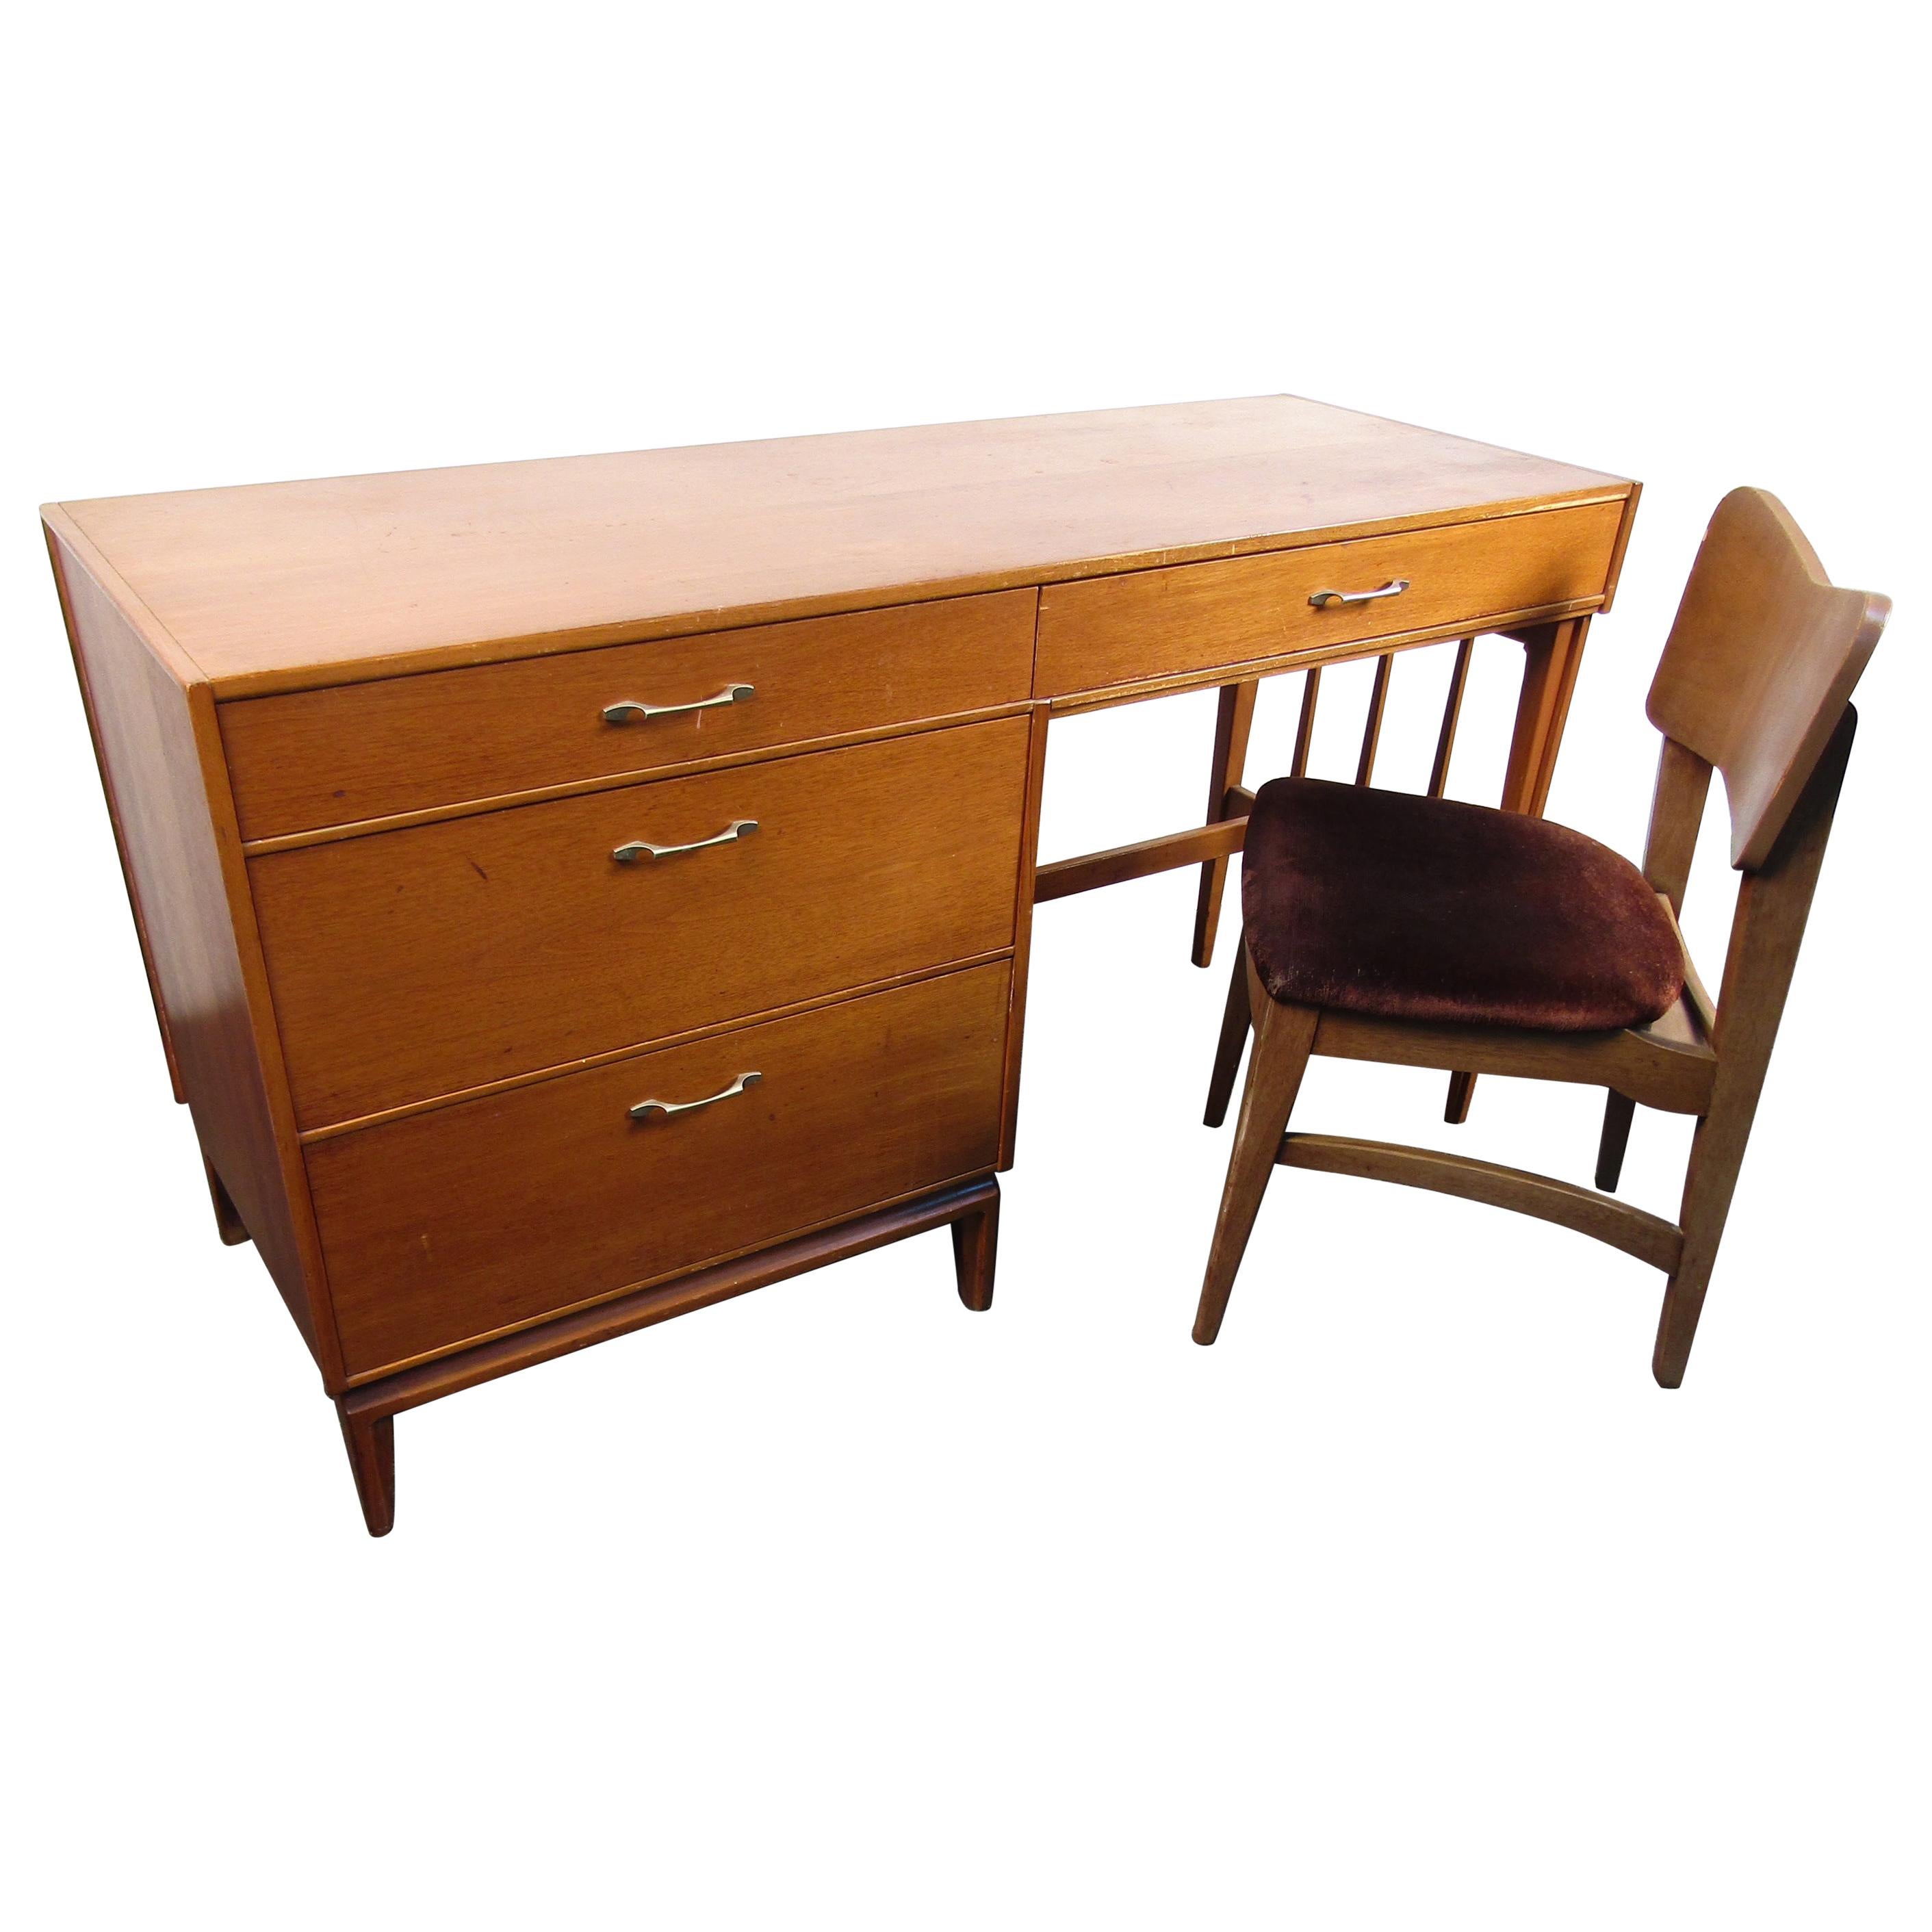 Midcentury Desk by J.B. Van Sciver Co.